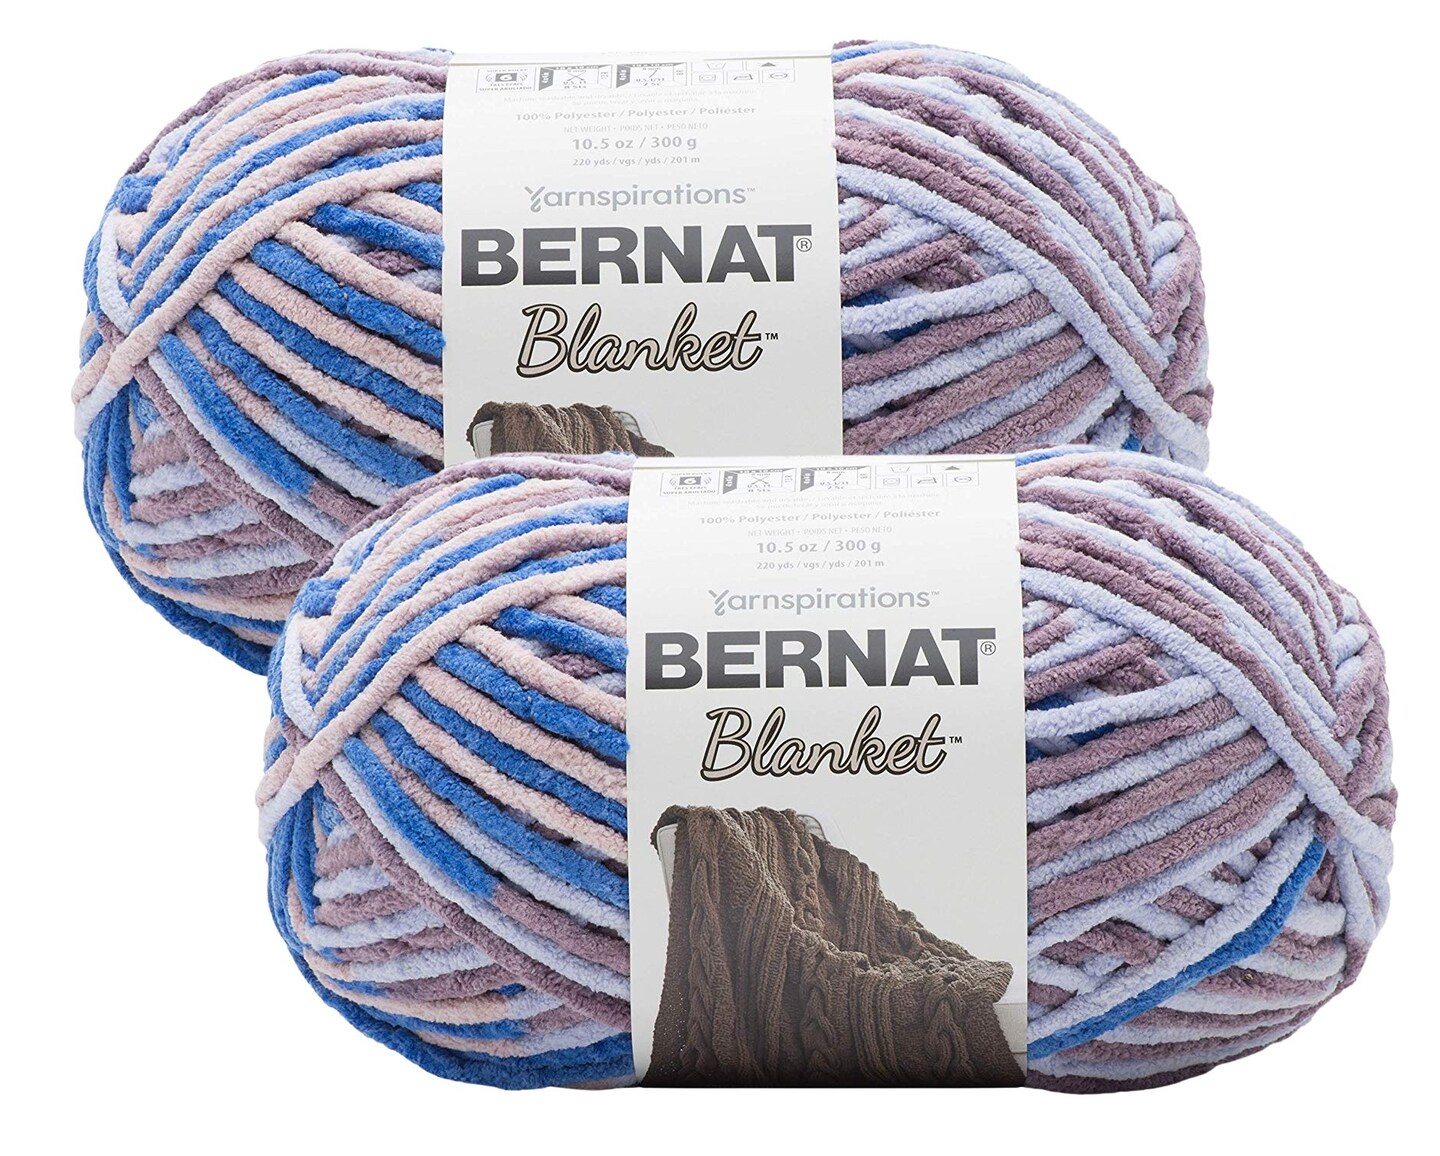 Bernat Blanket Yarn - Big Ball (10.5 oz) - 2 Pack (Dappled Shadows)